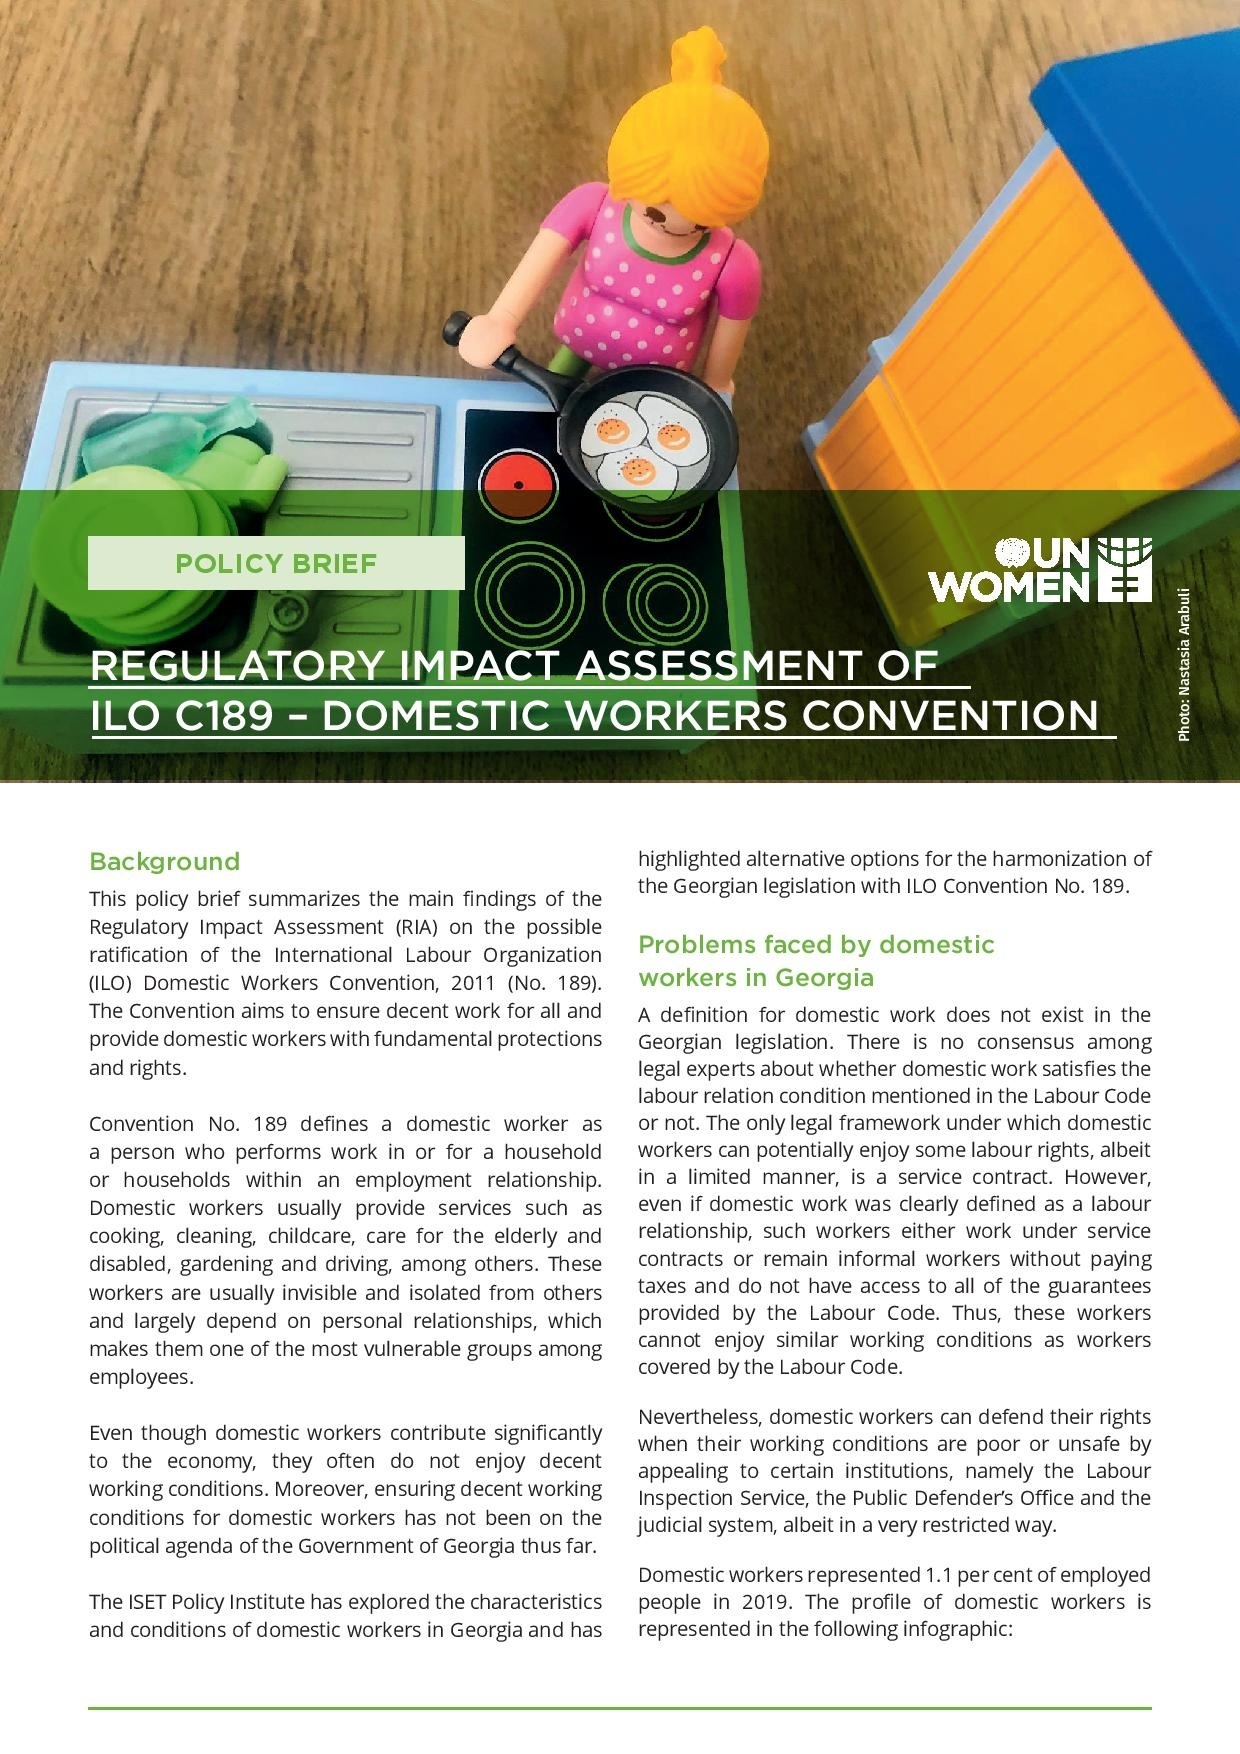 Regulatory Impact Assessment of ILO C189 - Domestic Workers Convention. Photo: UN Women